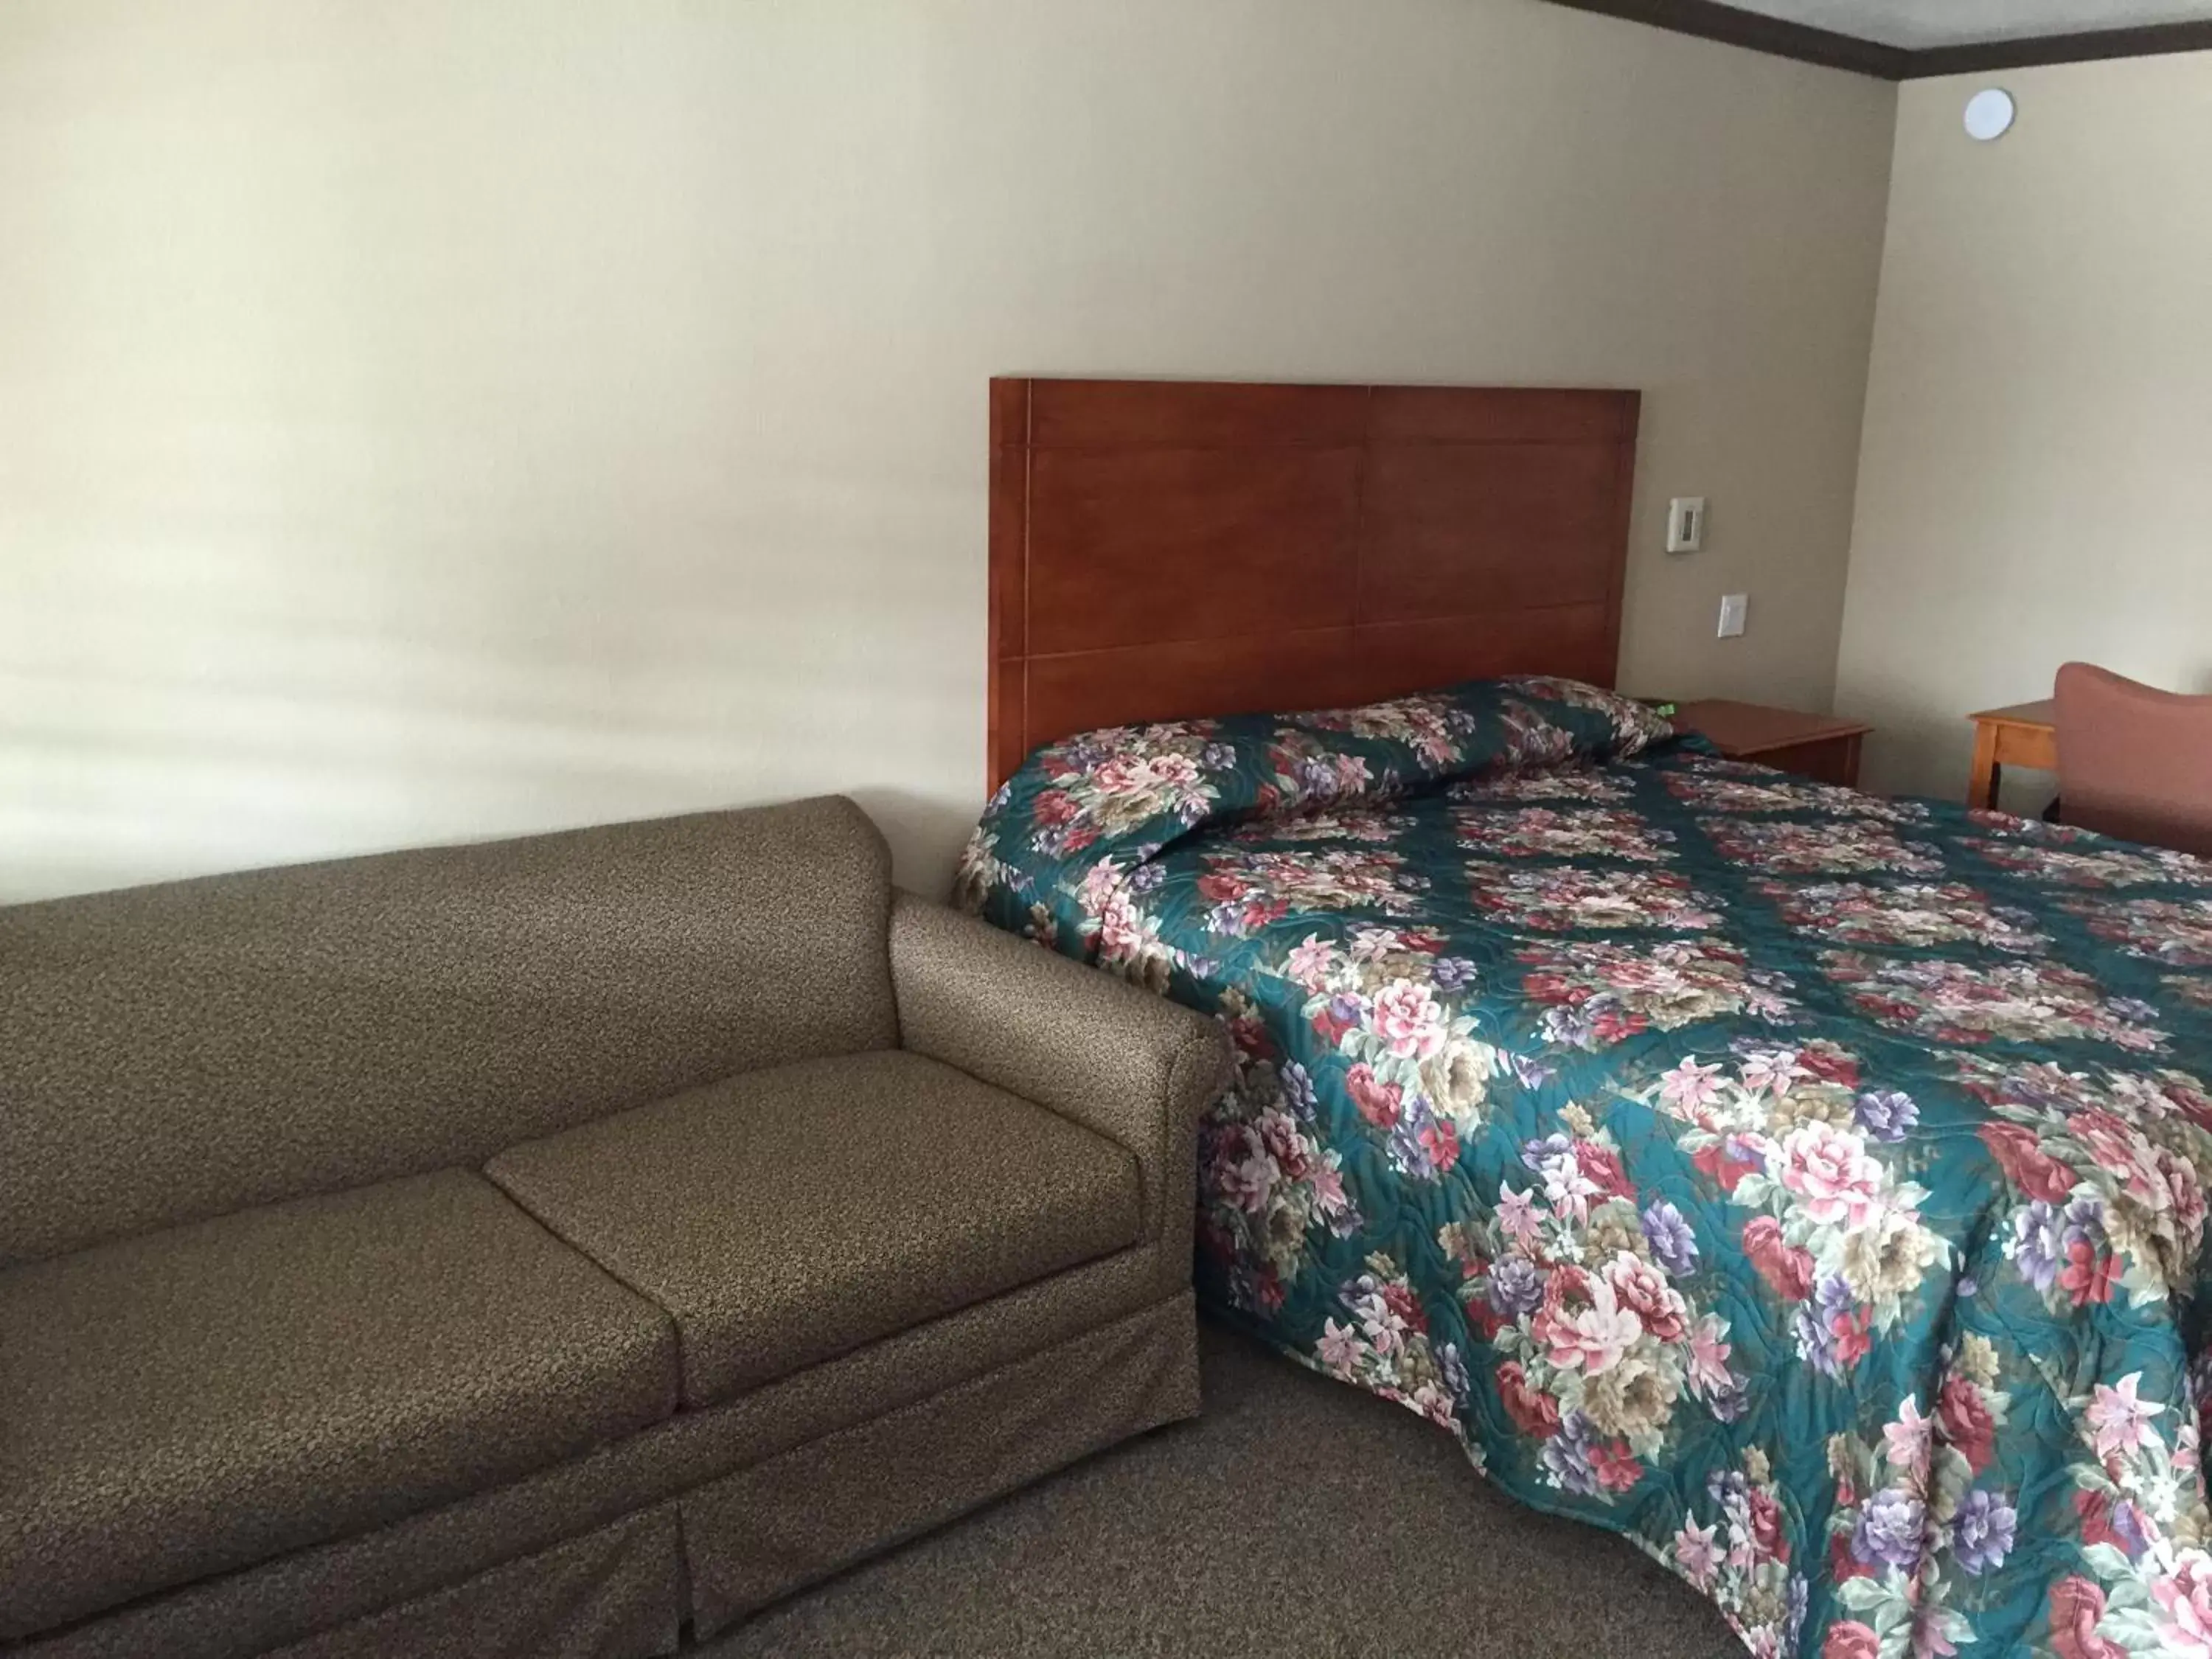 Bed, Room Photo in Deluxe Inn Redwood City